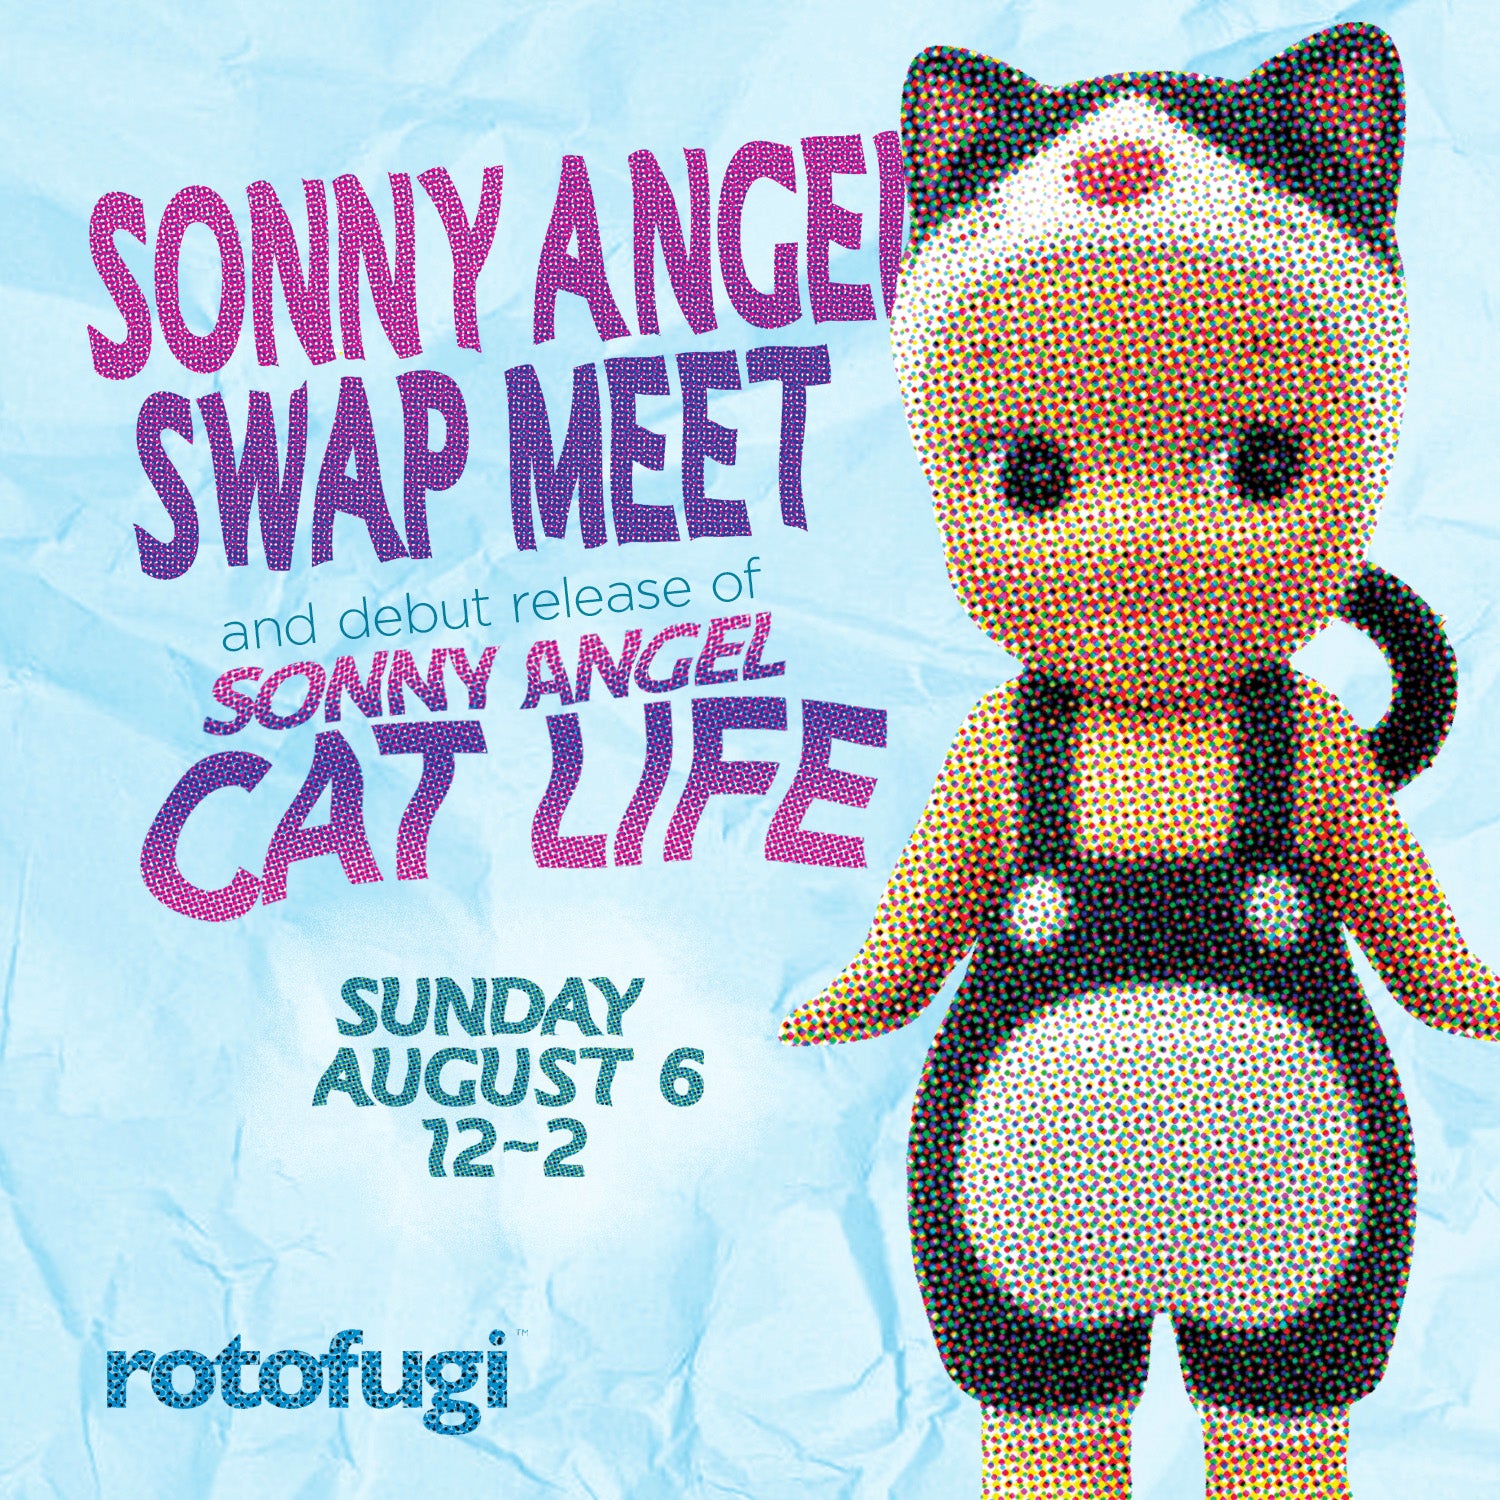 Sonny Angel Swap Meet and Cat Life Release Banner Image }}